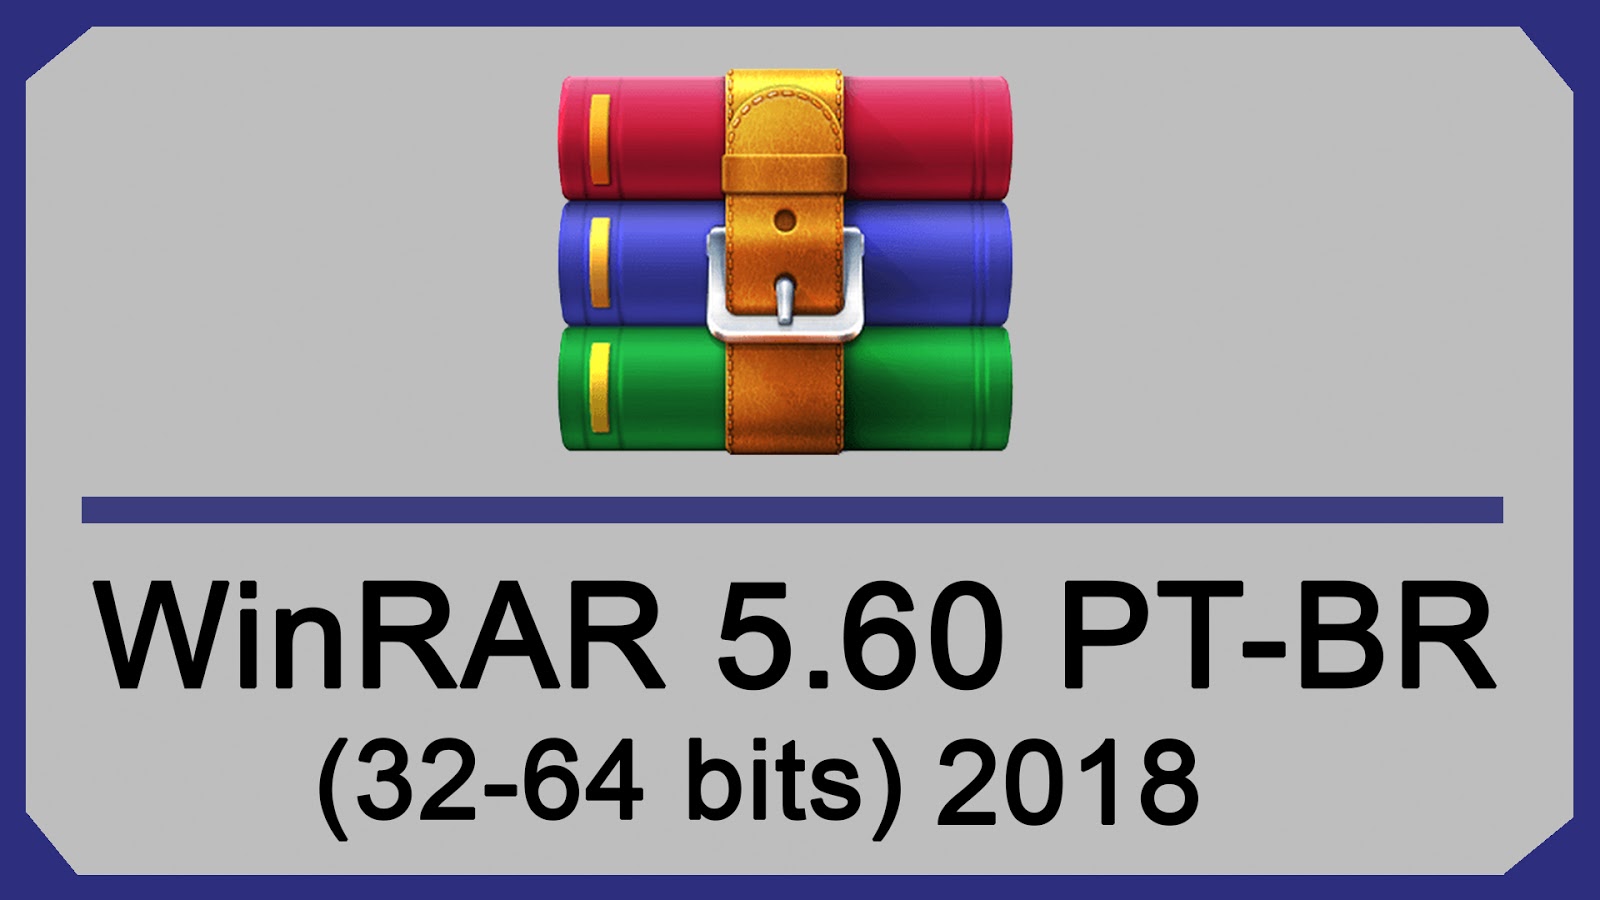 winrar download gratis portugues windows 7 64 bits